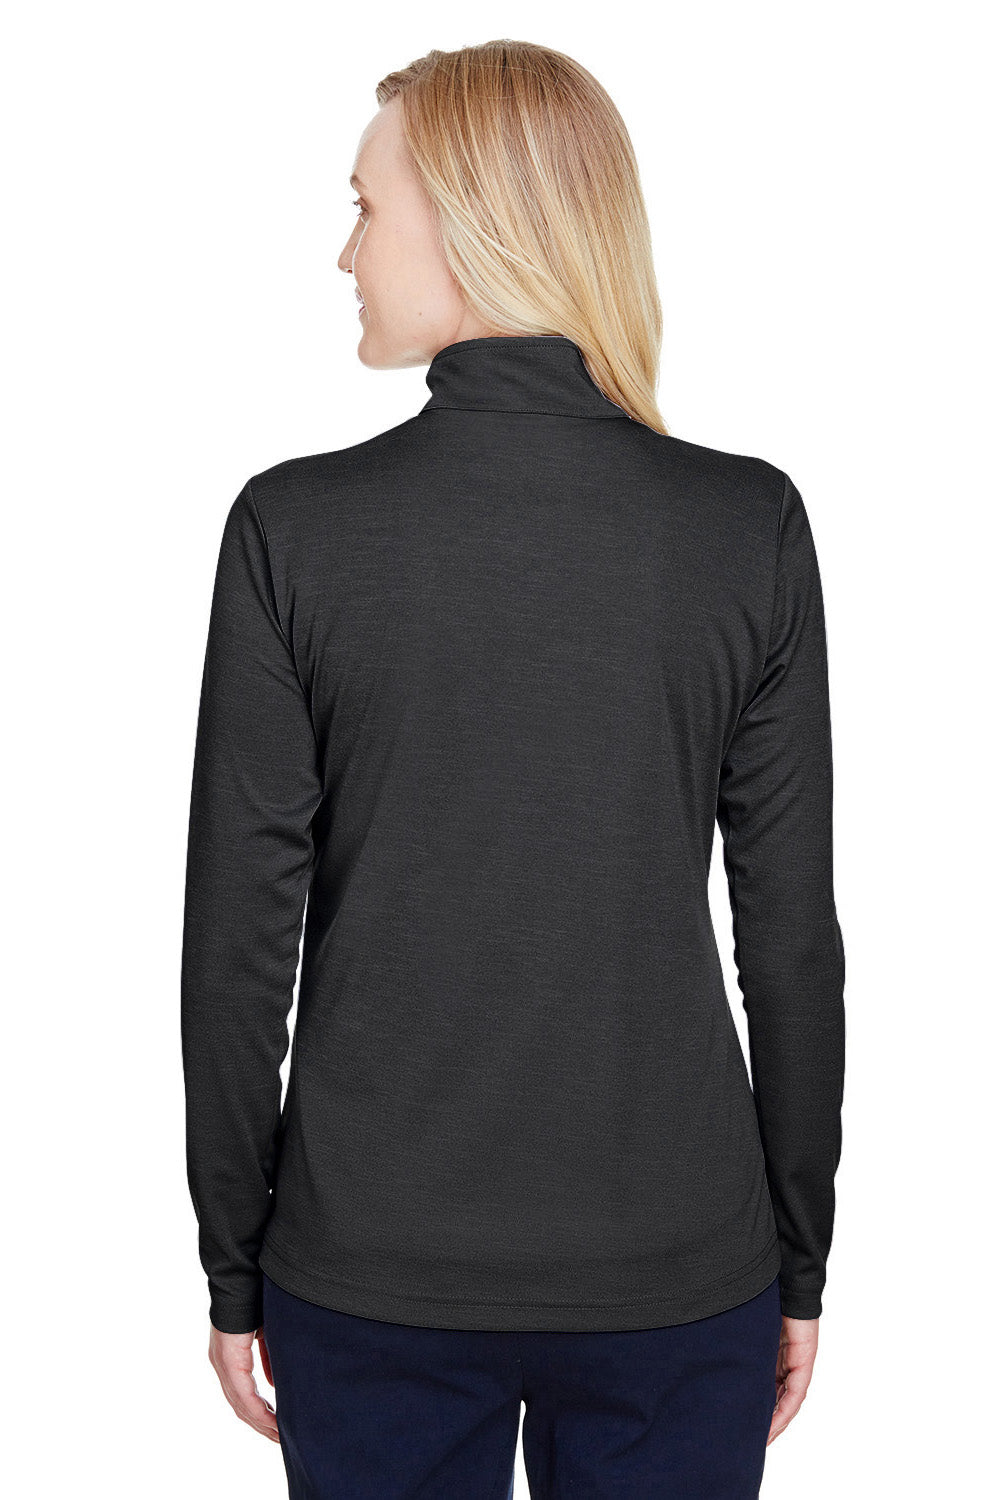 Team 365 TT31HW Womens Zone Sonic Performance Moisture Wicking 1/4 Zip Sweatshirt Black Back